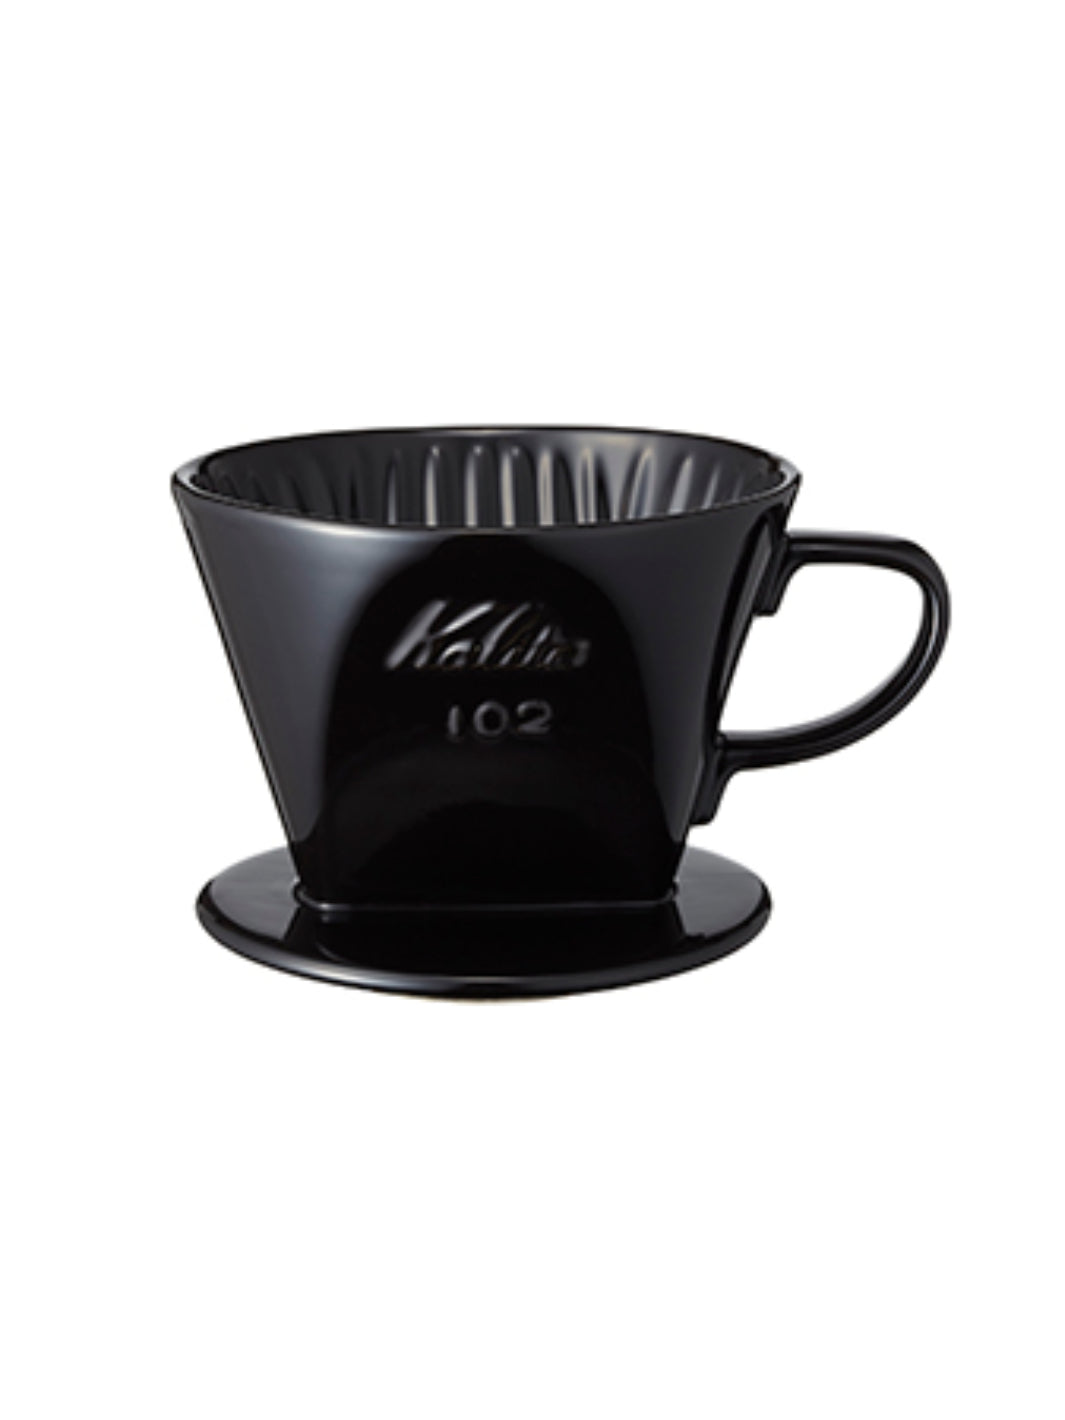 Kalita Ceramic Coffee Dripper 102 Lotto Black #02005